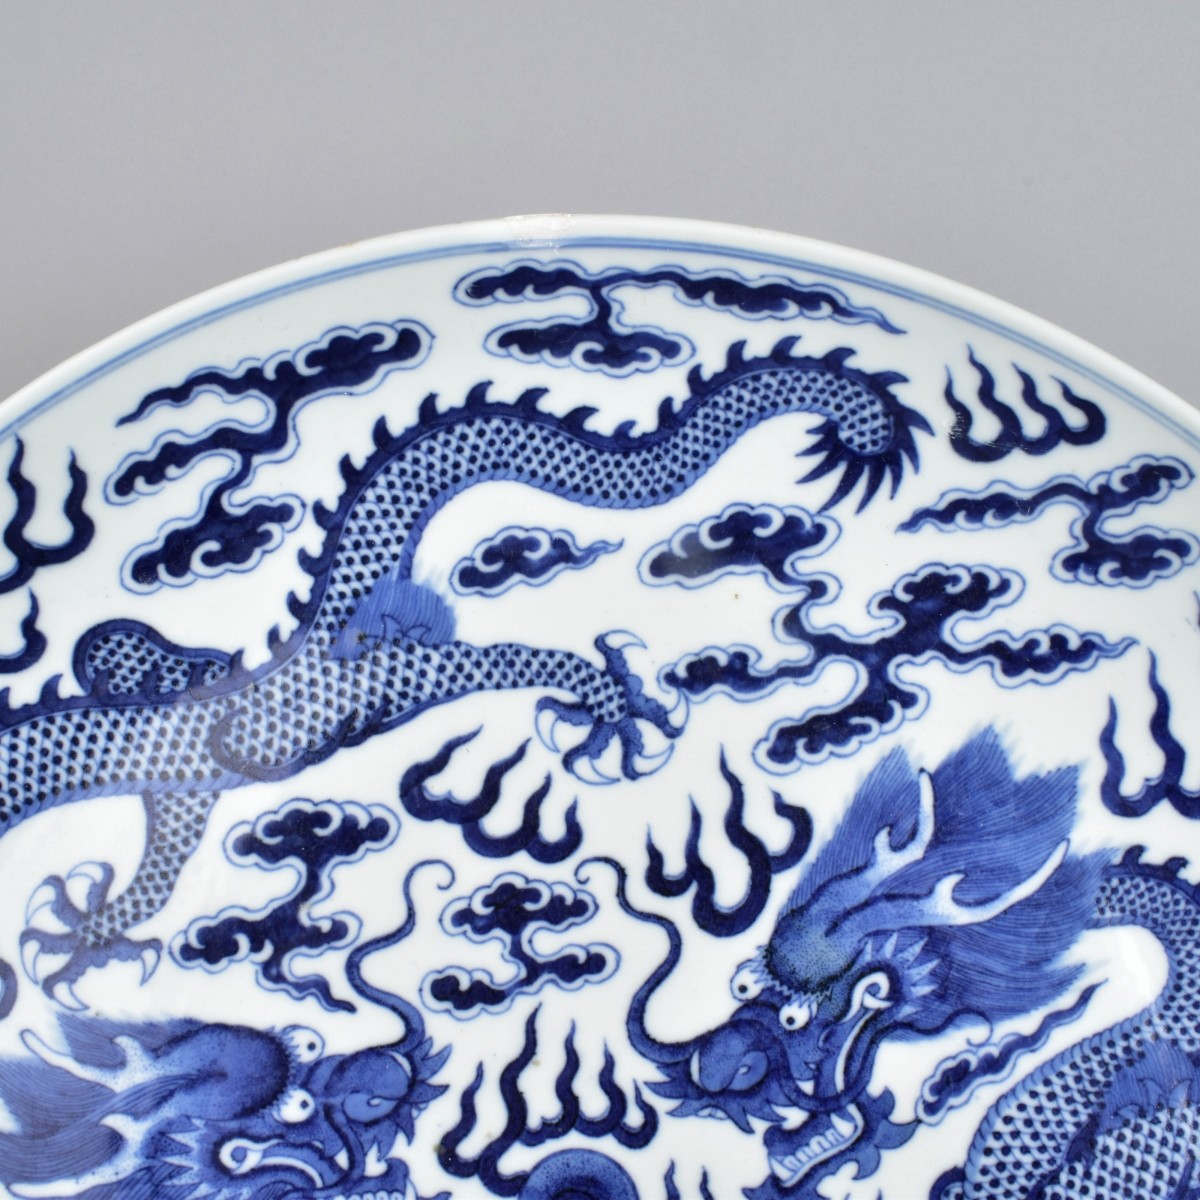 Blue and White "Dragon" Dish Guangxu Mark